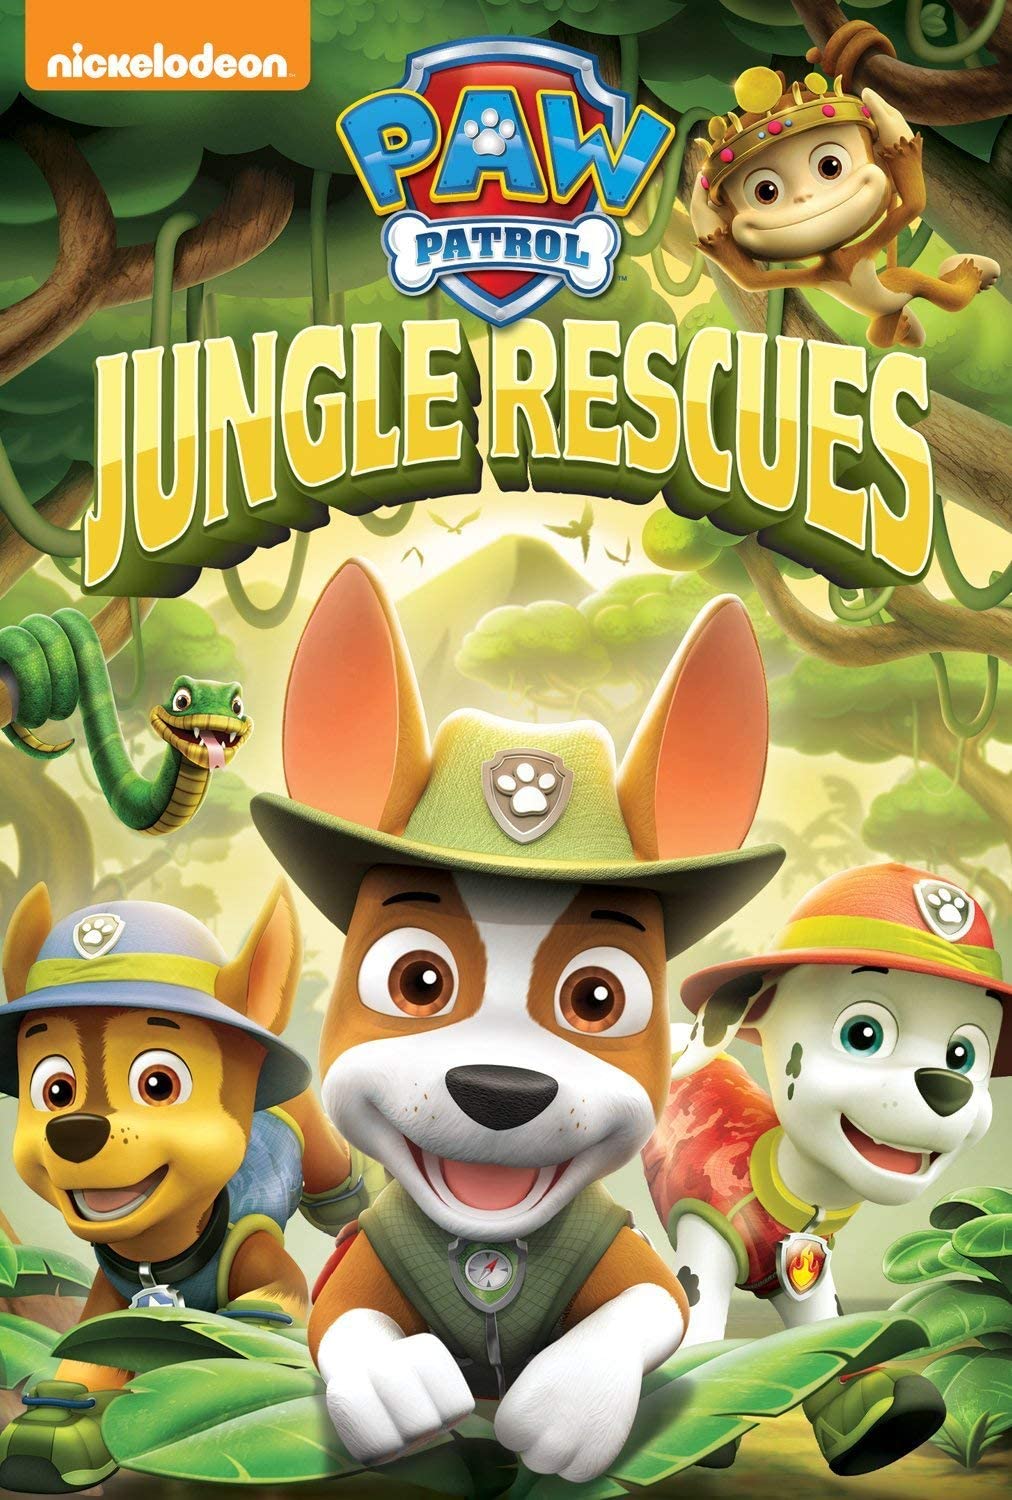 Paw Patrol: Jungle Rescues [DVD]